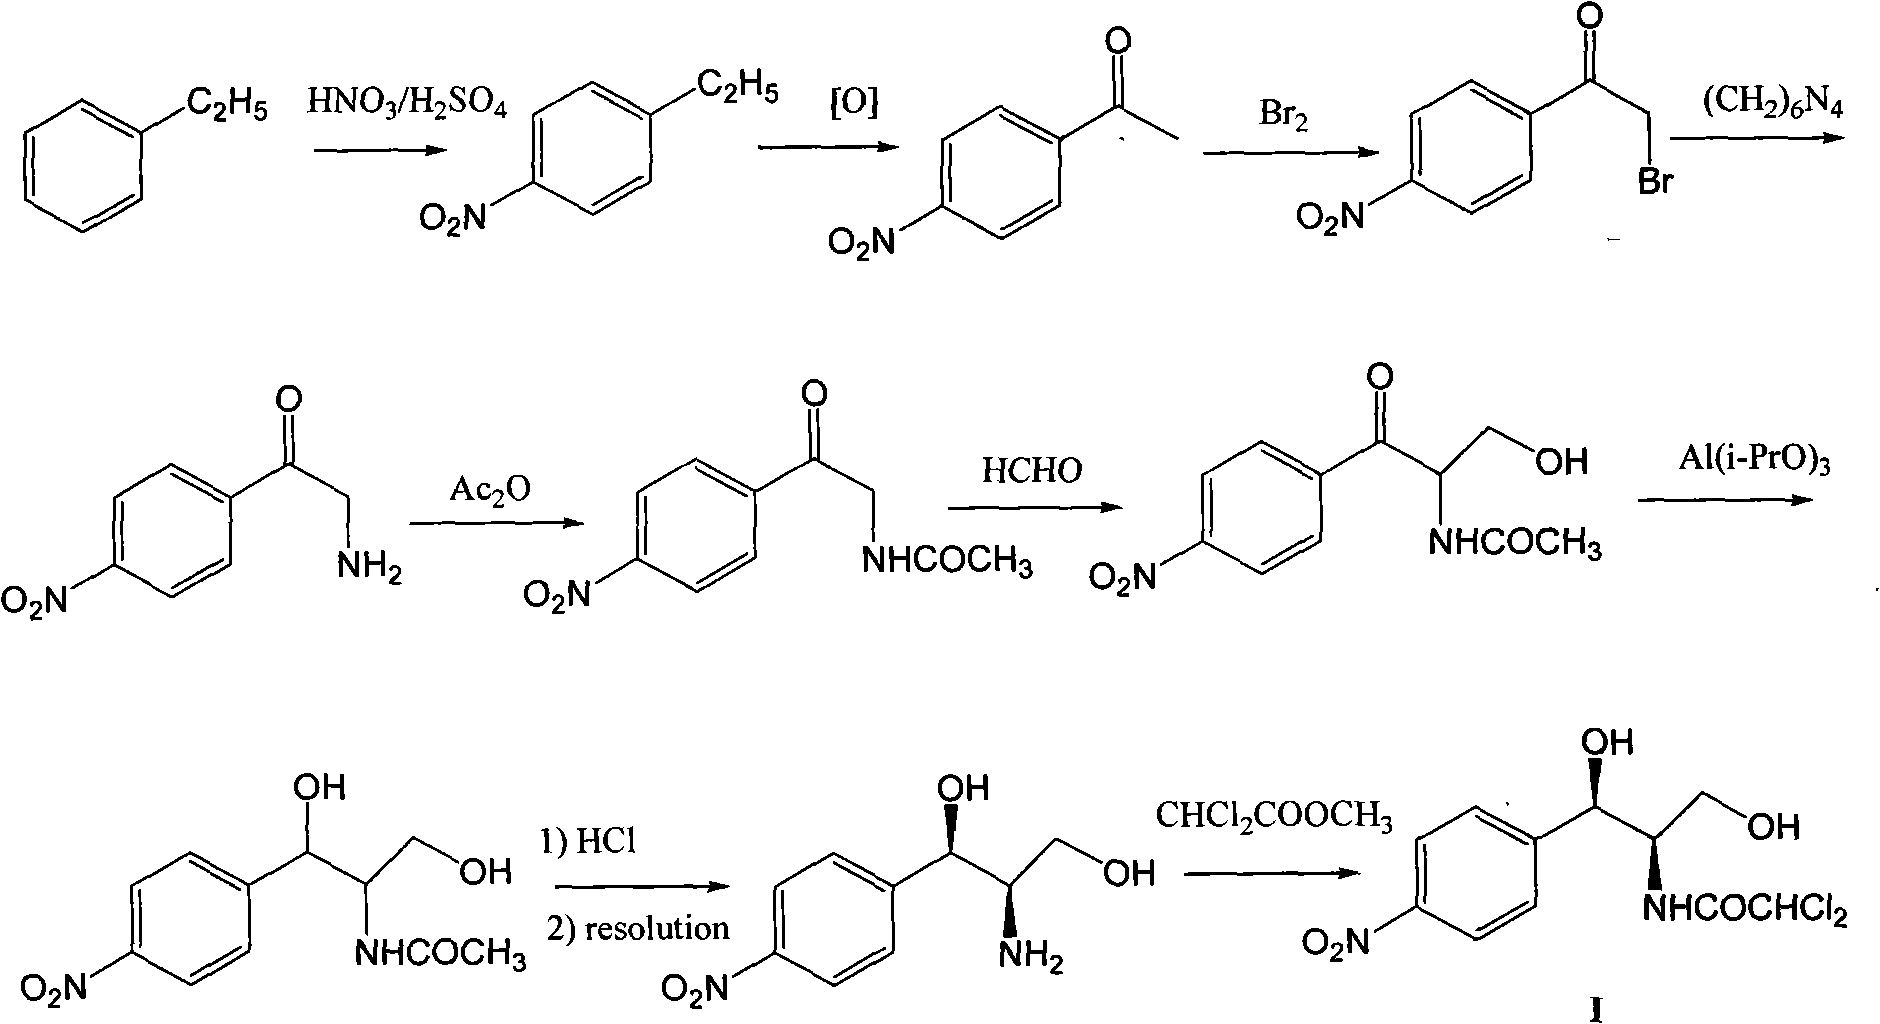 Method for preparing chloramphenicol from 4-chloro-benzaldehyde